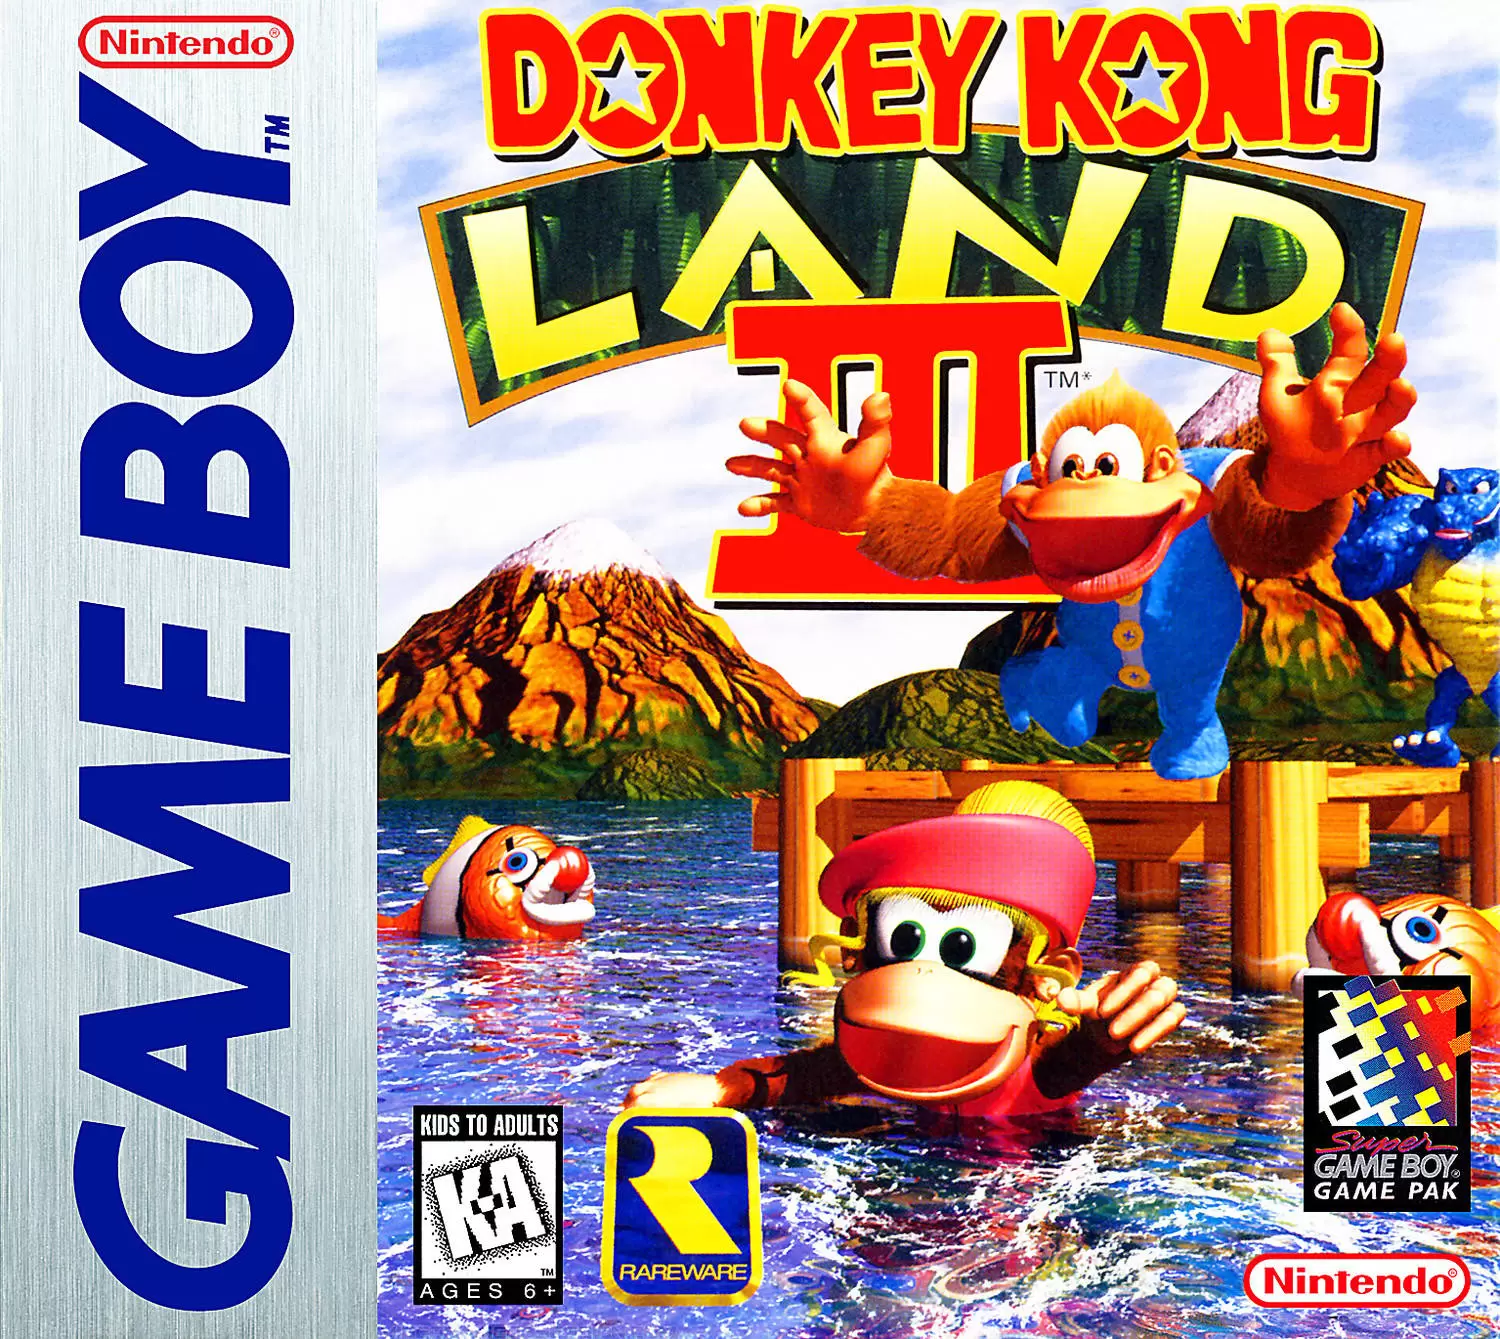 Game Boy Games - Donkey Kong Land III